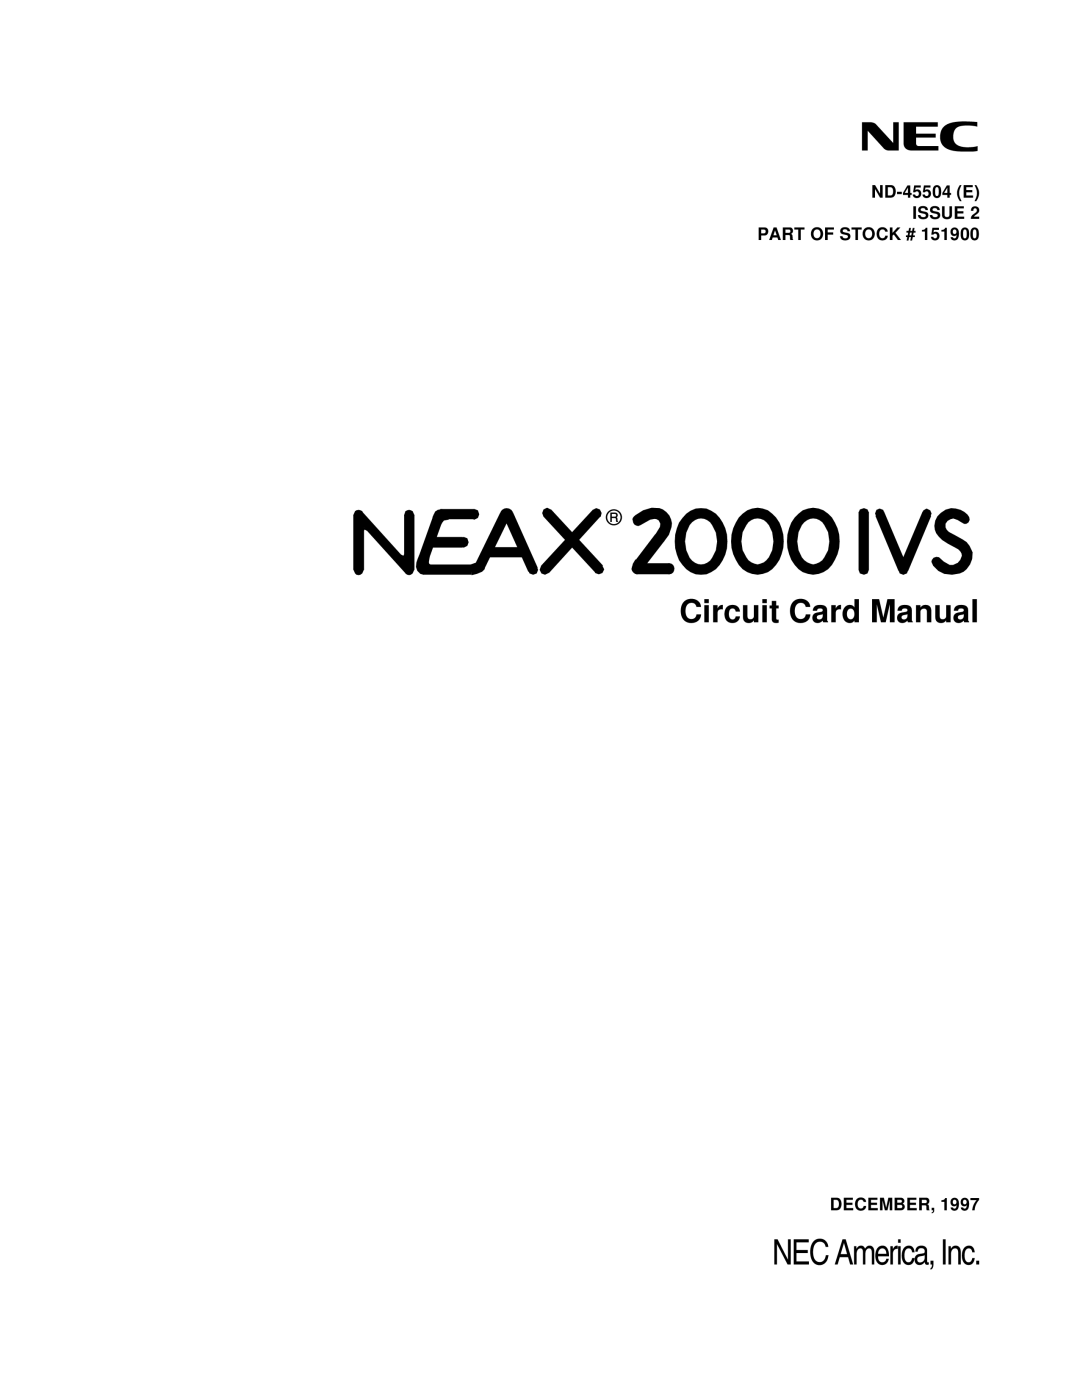 NEC 2000 IVS manual NEC America, Inc, Circuit Card Manual 